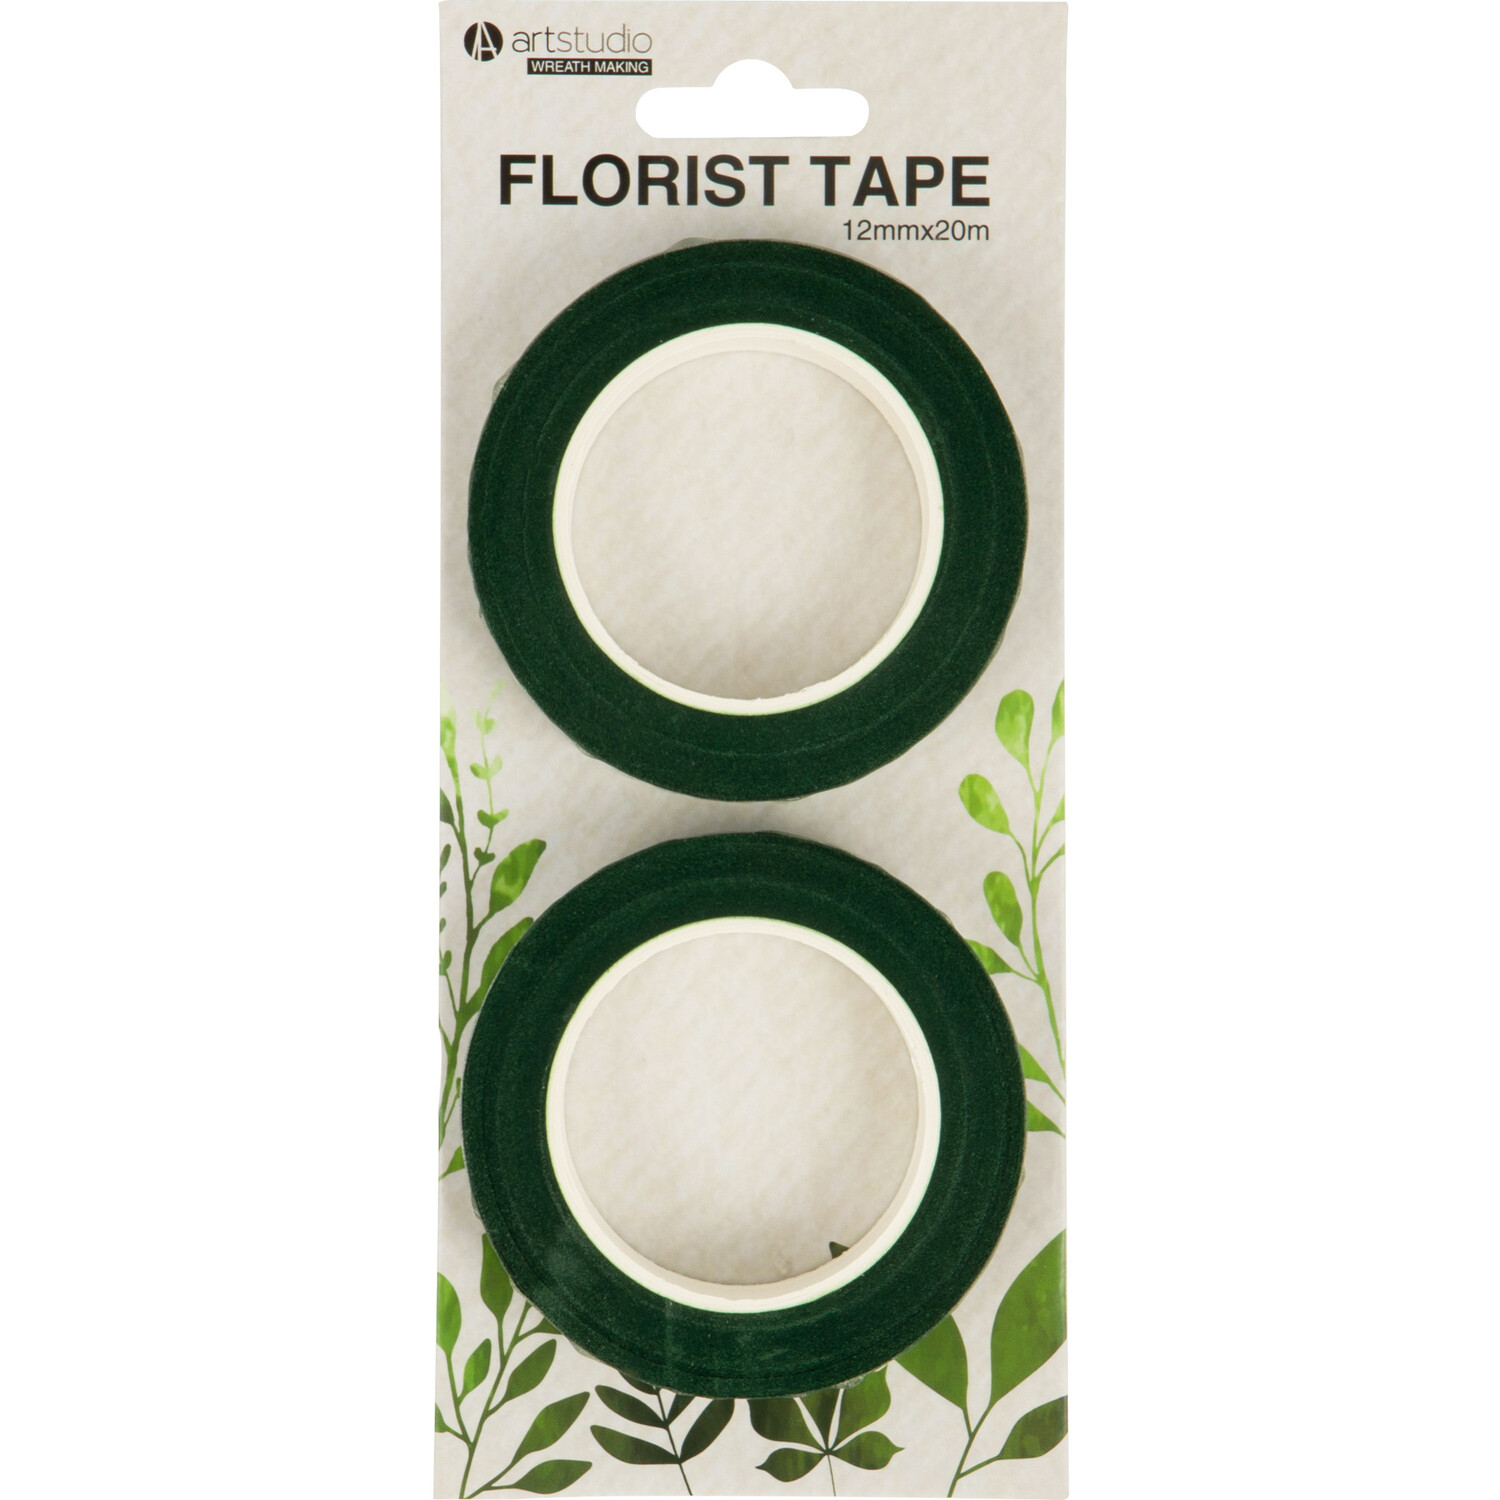 Art Studio Florist Tape - Green Image 1